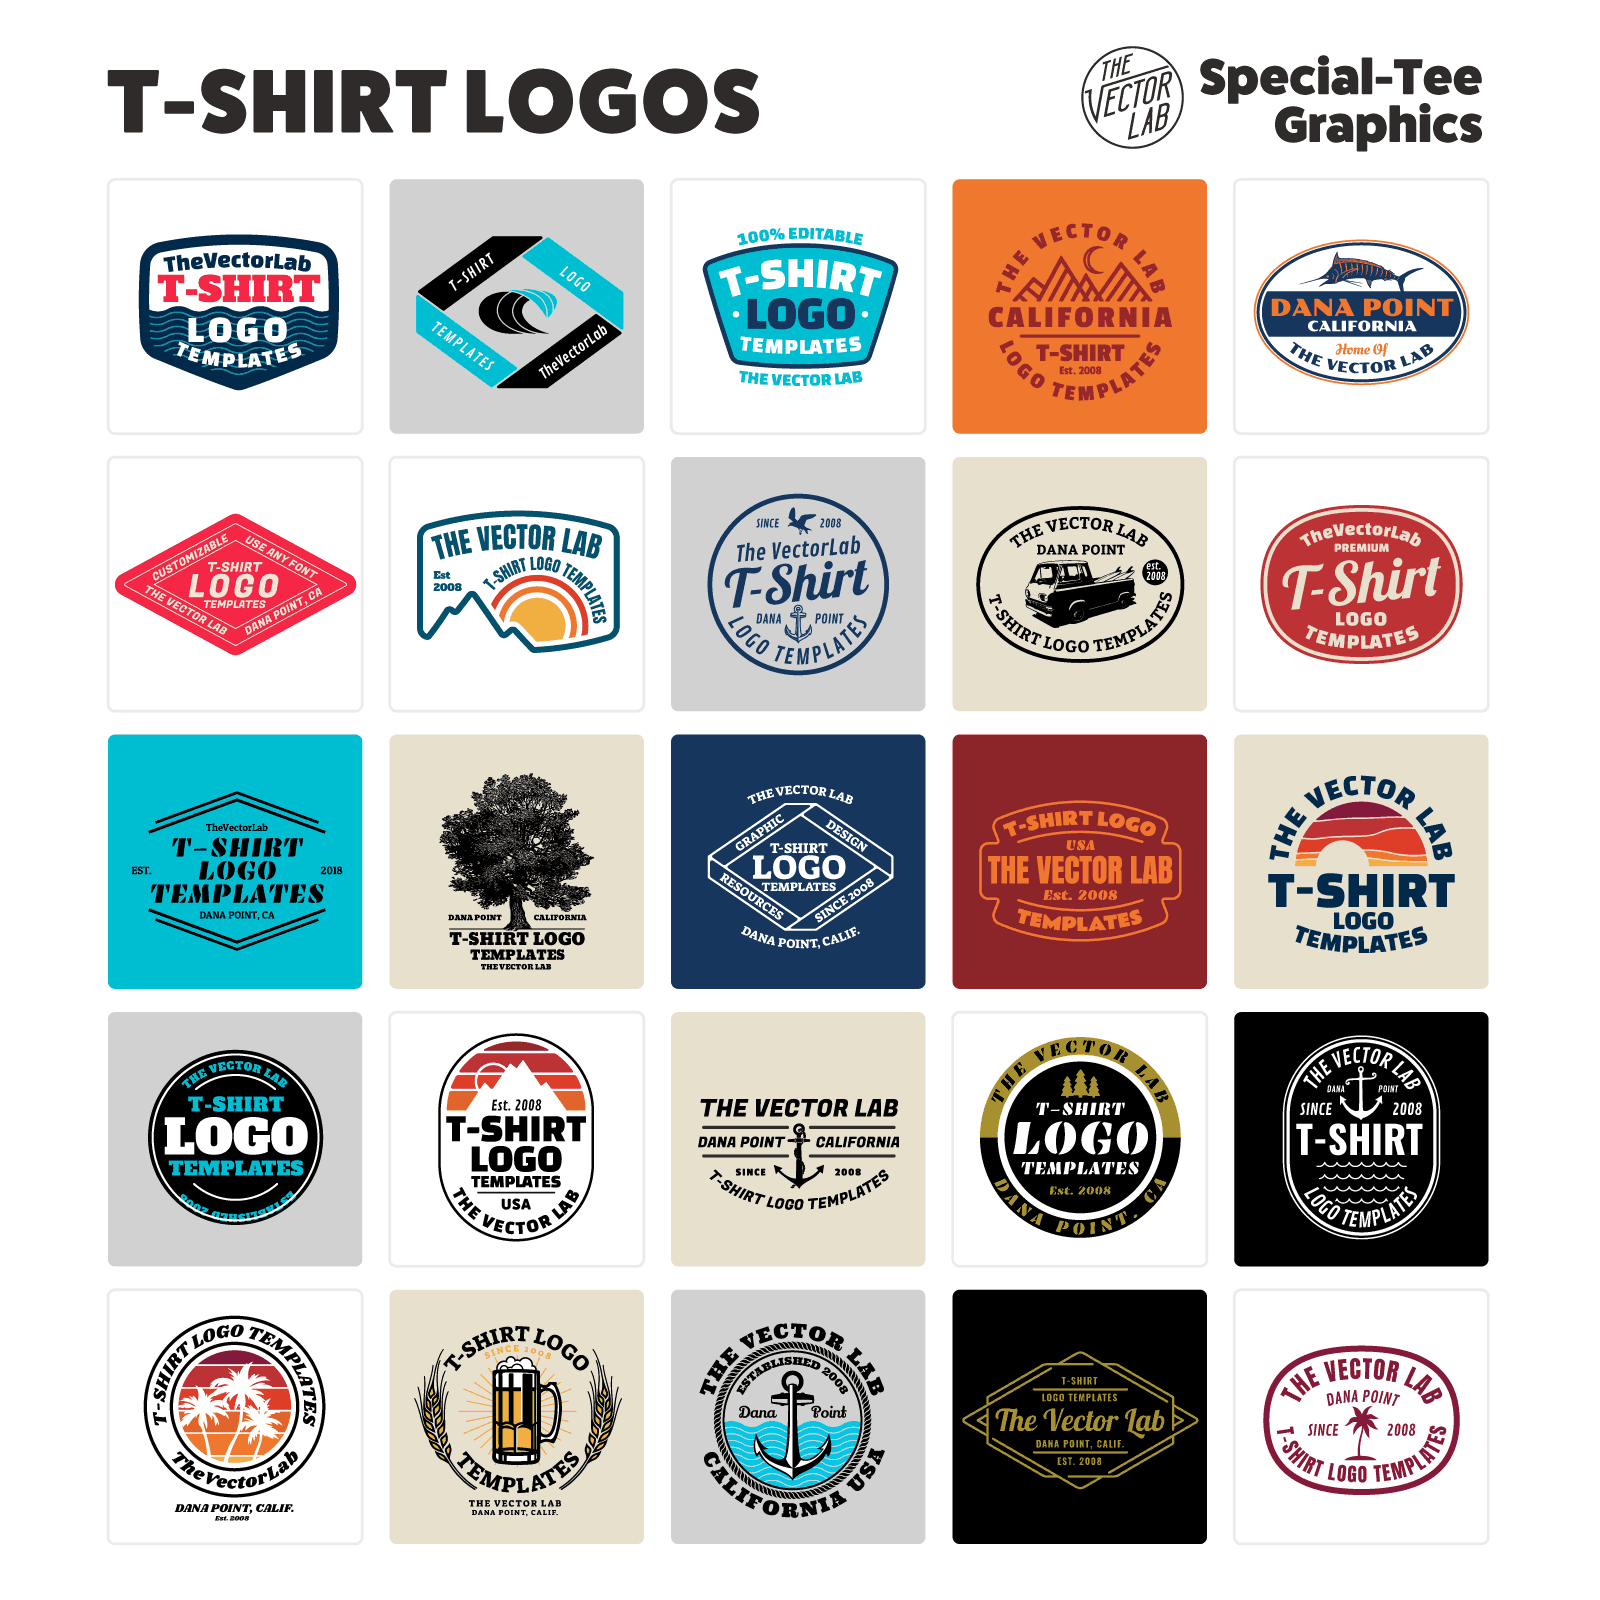 Cut Out Logos - 12+ Best Cut Out Logo Ideas. Free Cut Out Logo